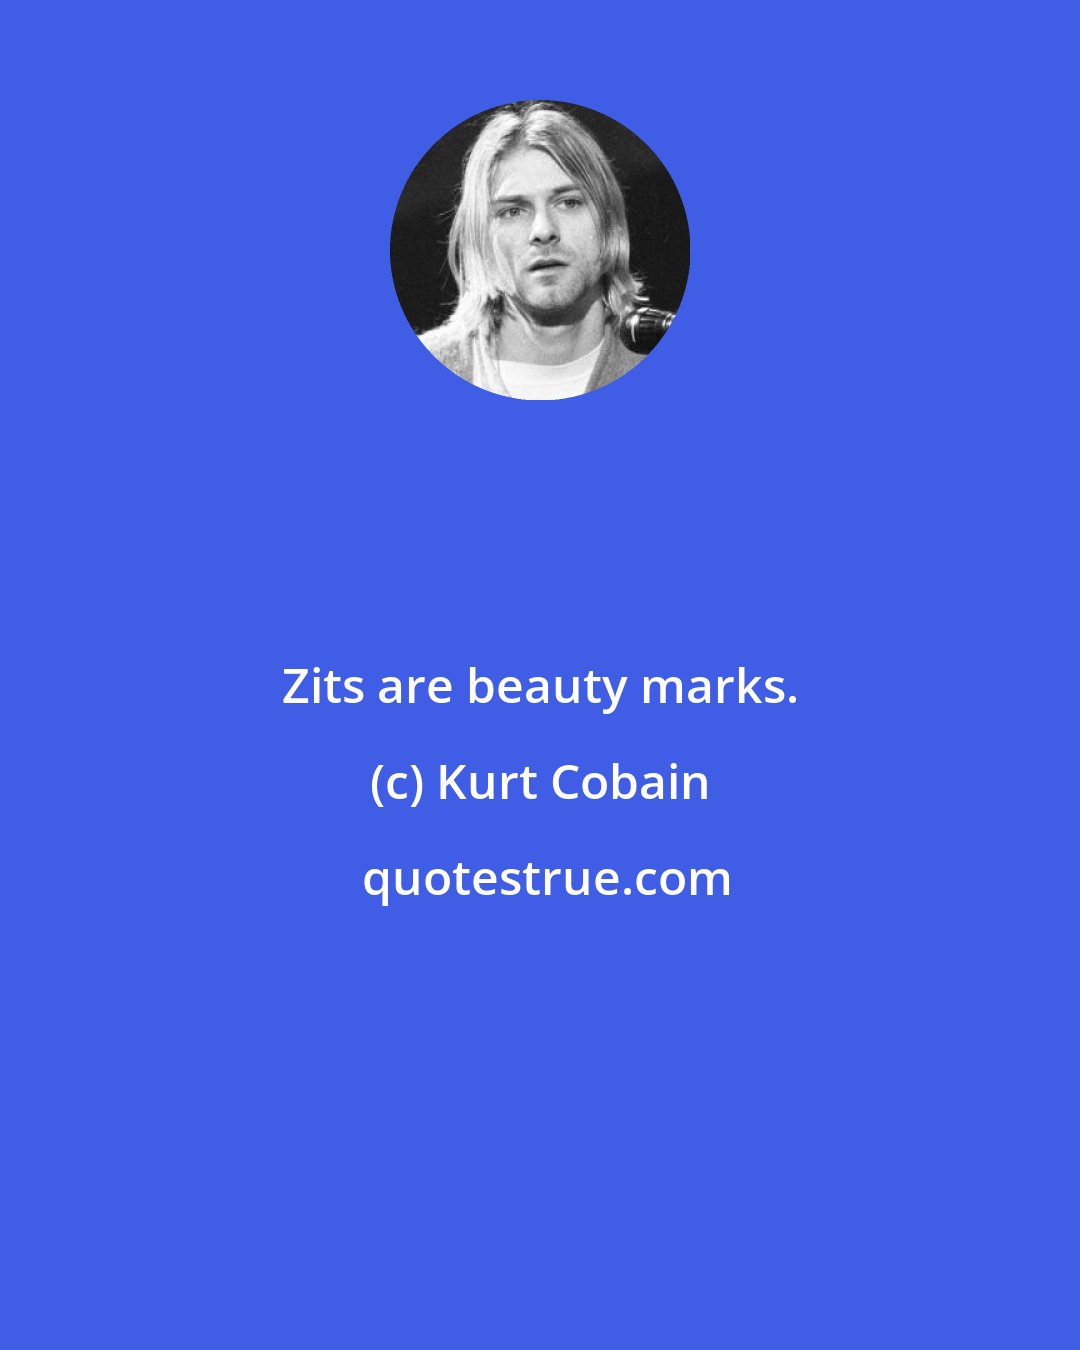 Kurt Cobain: Zits are beauty marks.